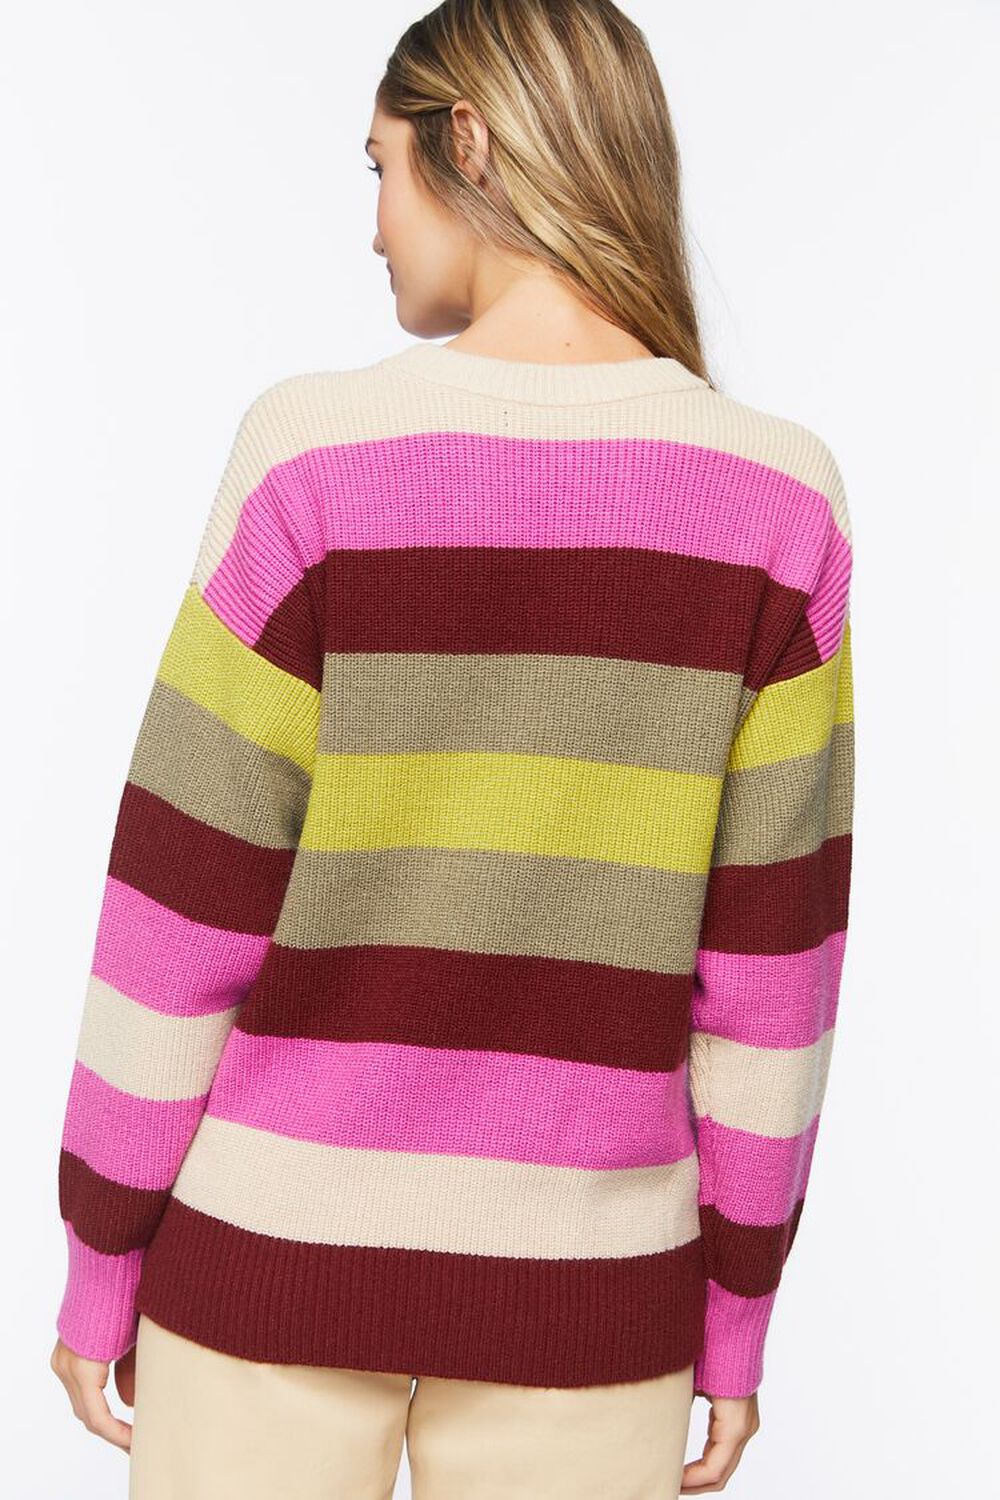 TAN/MULTI Mushroom Graphic Striped Sweater, image 3